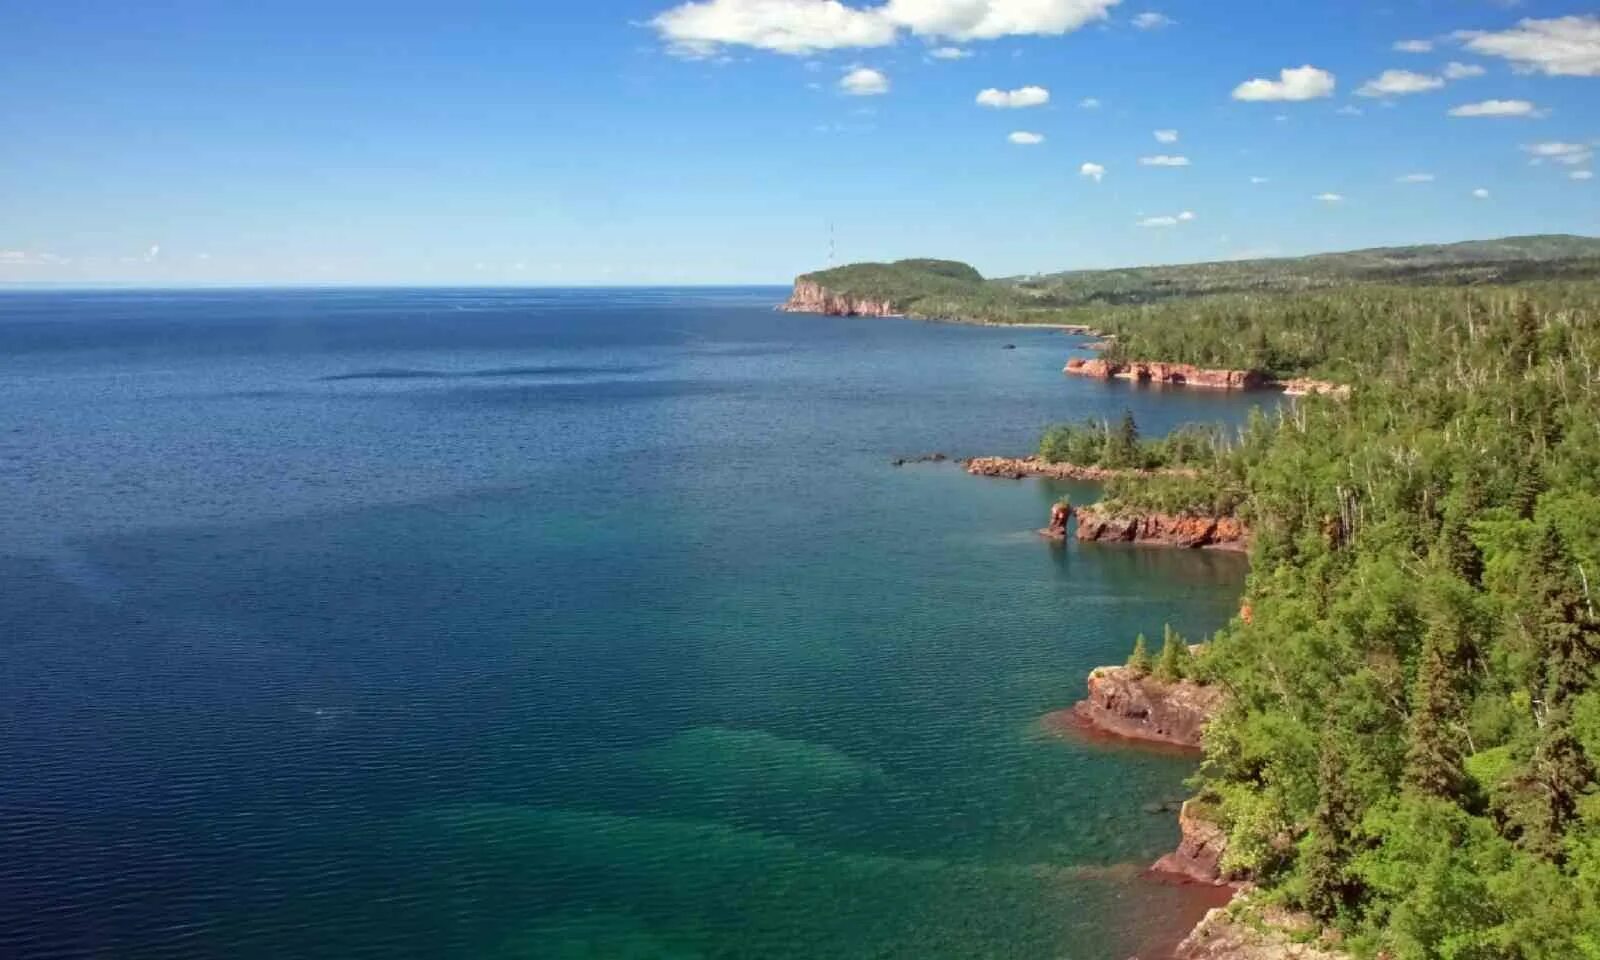 Верхнее озеро (Lake Superior). Канада. Озеро Гурон Северная Америка. Великие американские озёра верхнее Гурон Мичиган Эри Онтарио. Озеро Супериор США. Озеро верхнее объем воды